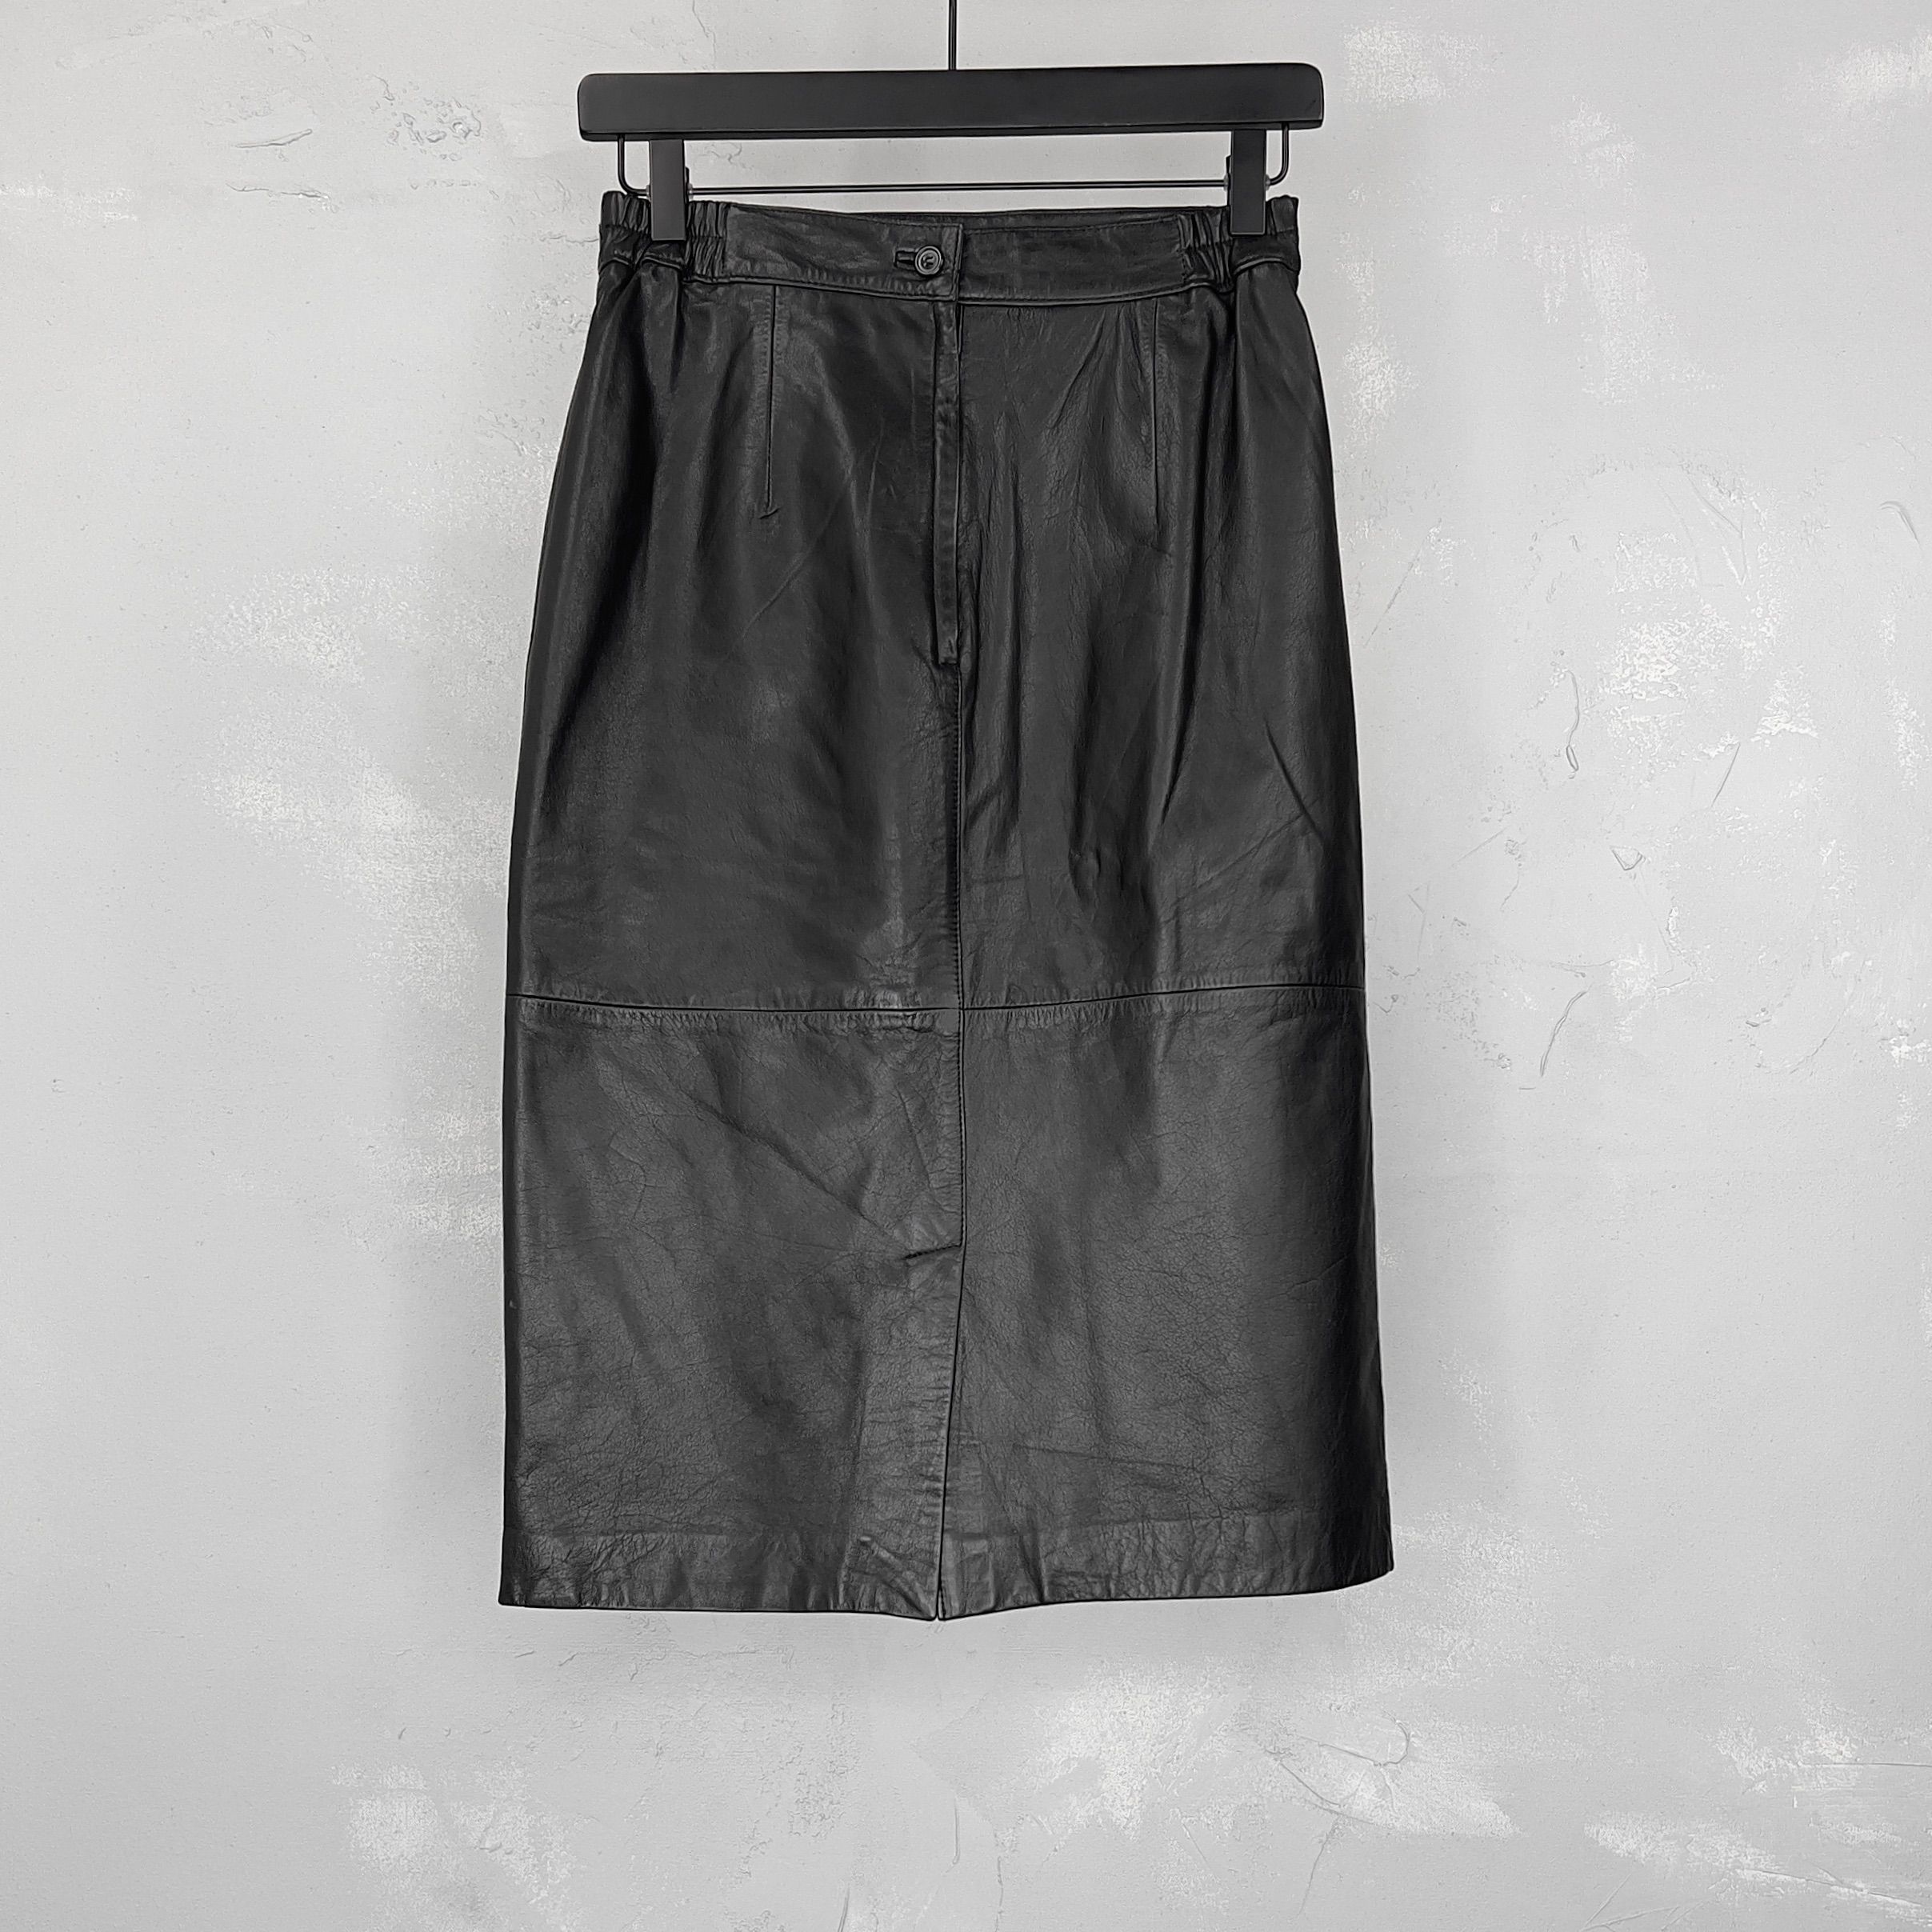 Vintage Vintage 1980s Switzer's Black Genuine Leather Skirt Size 26" / US 2 / IT 38 - 6 Preview